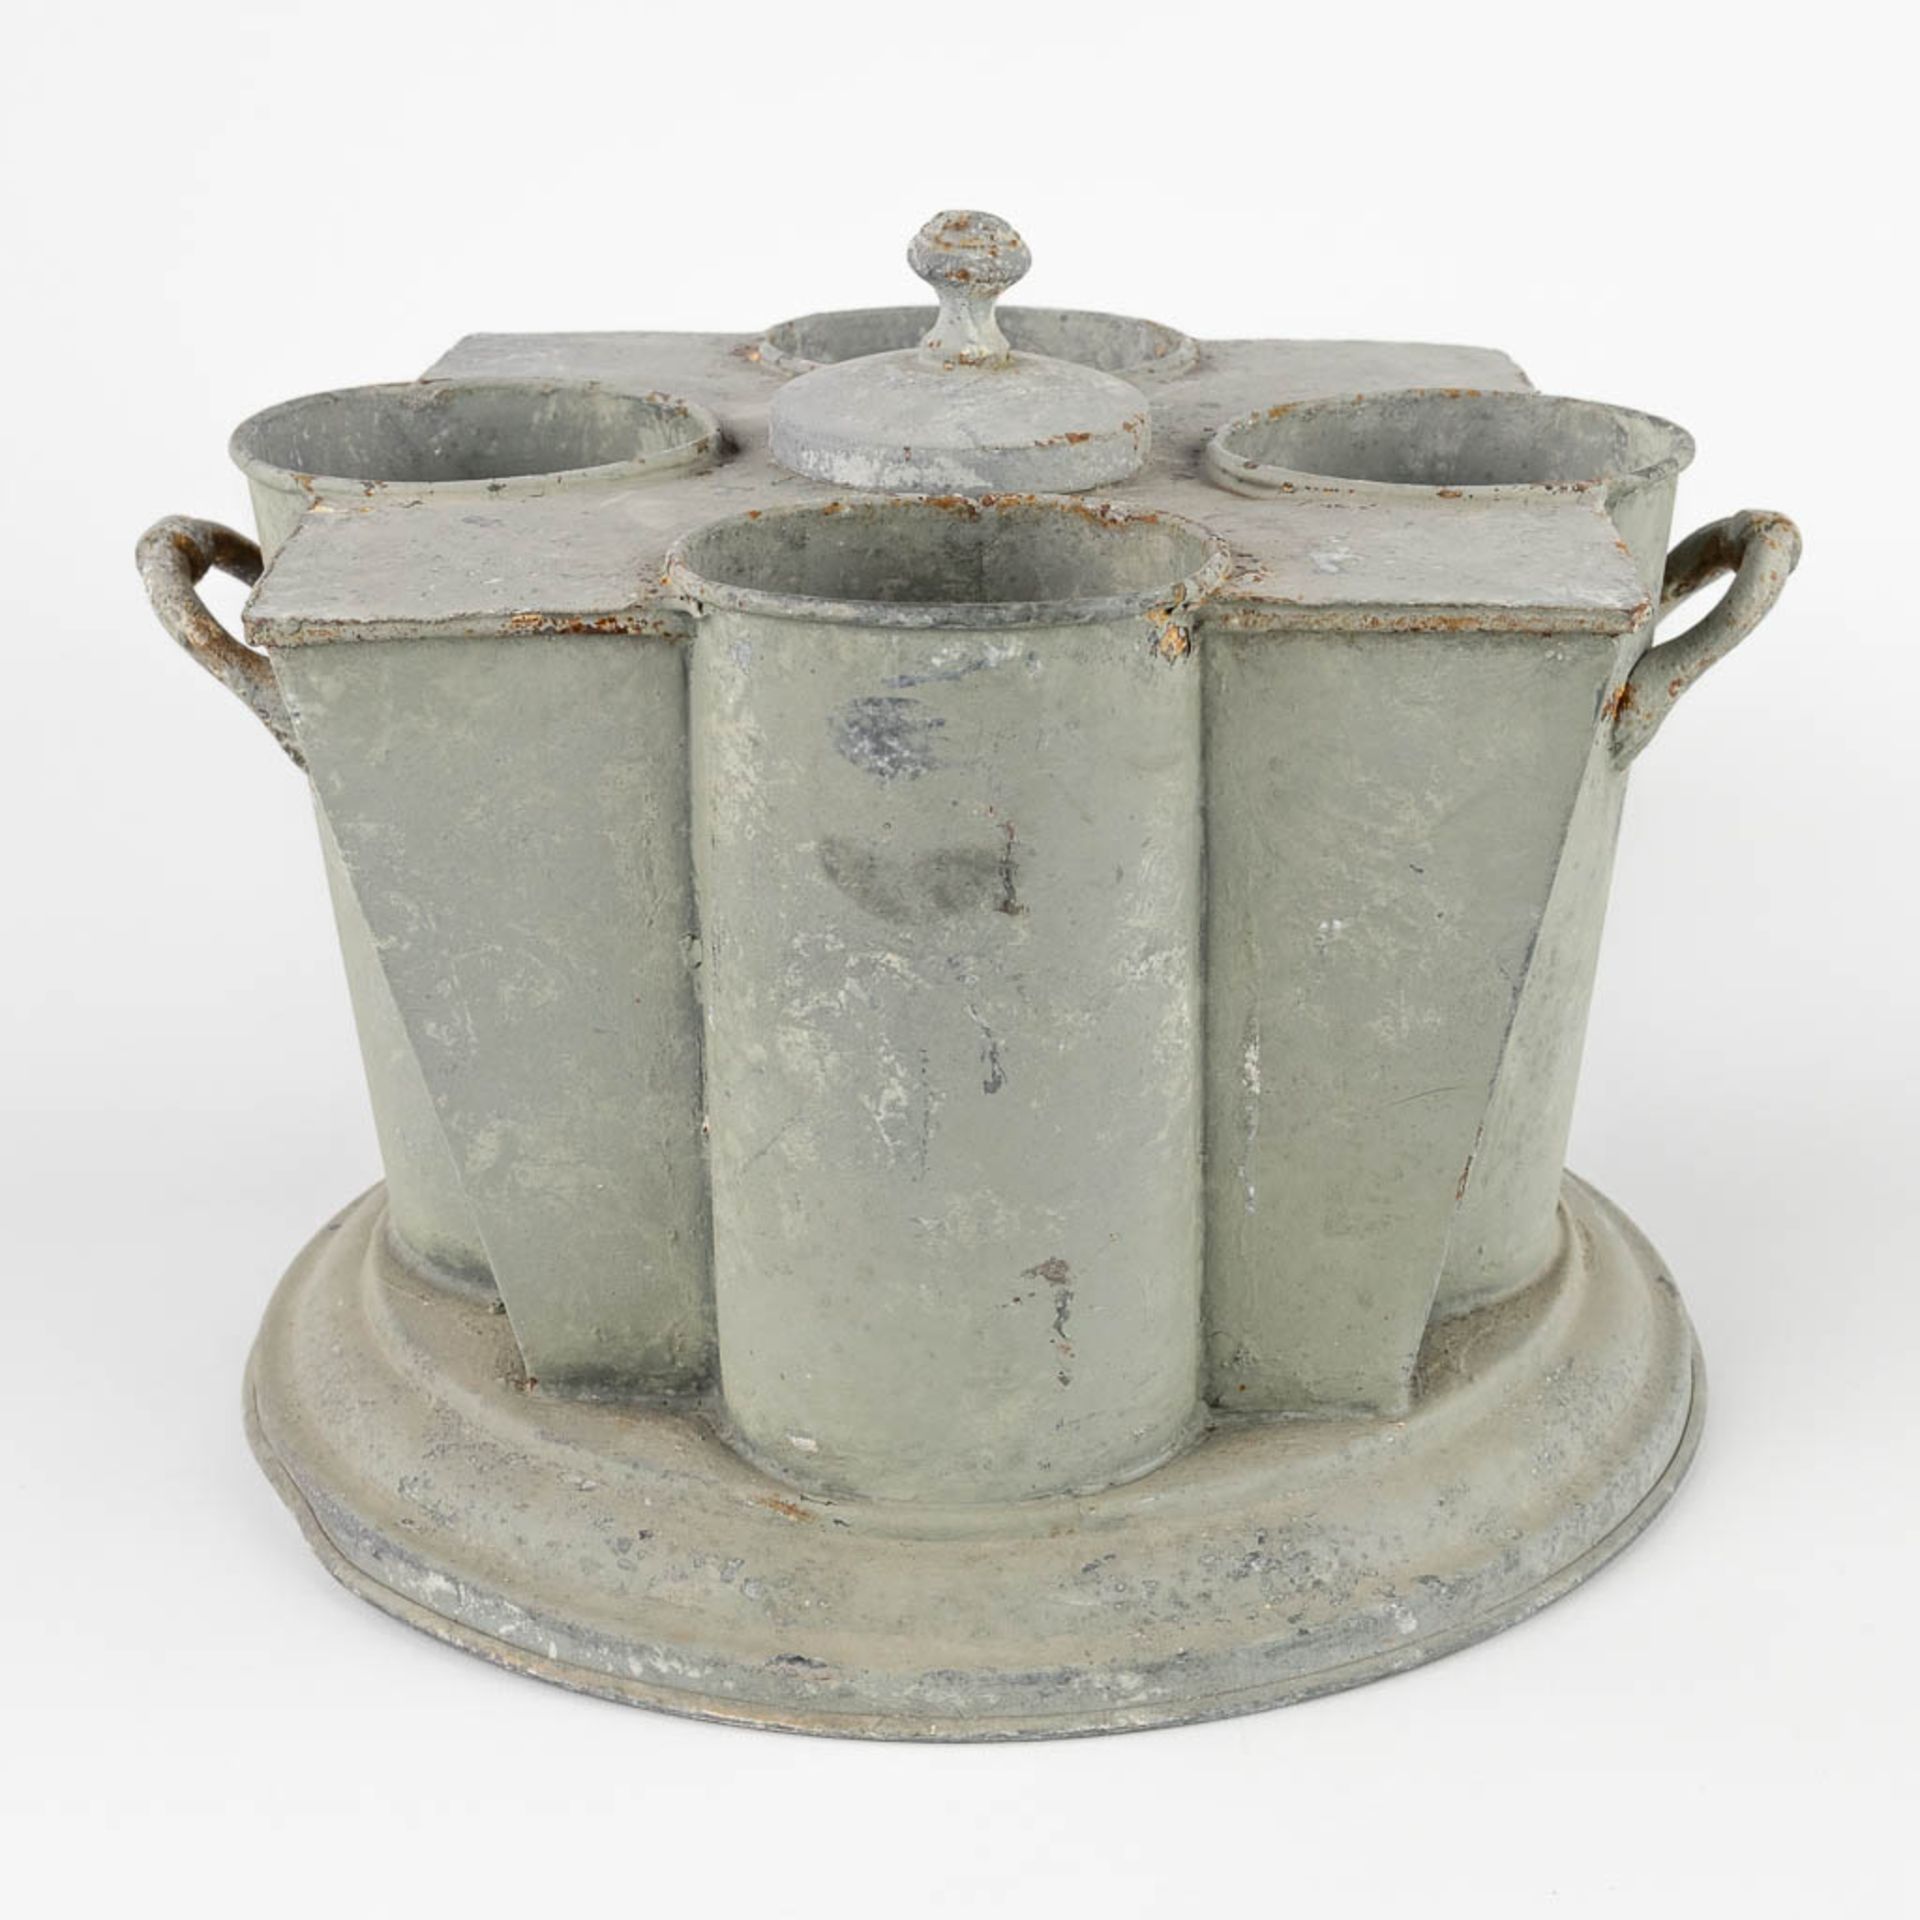 An antique wine cooler, made of zinc. (W:33 x H:25 x D:31 cm) - Image 5 of 13